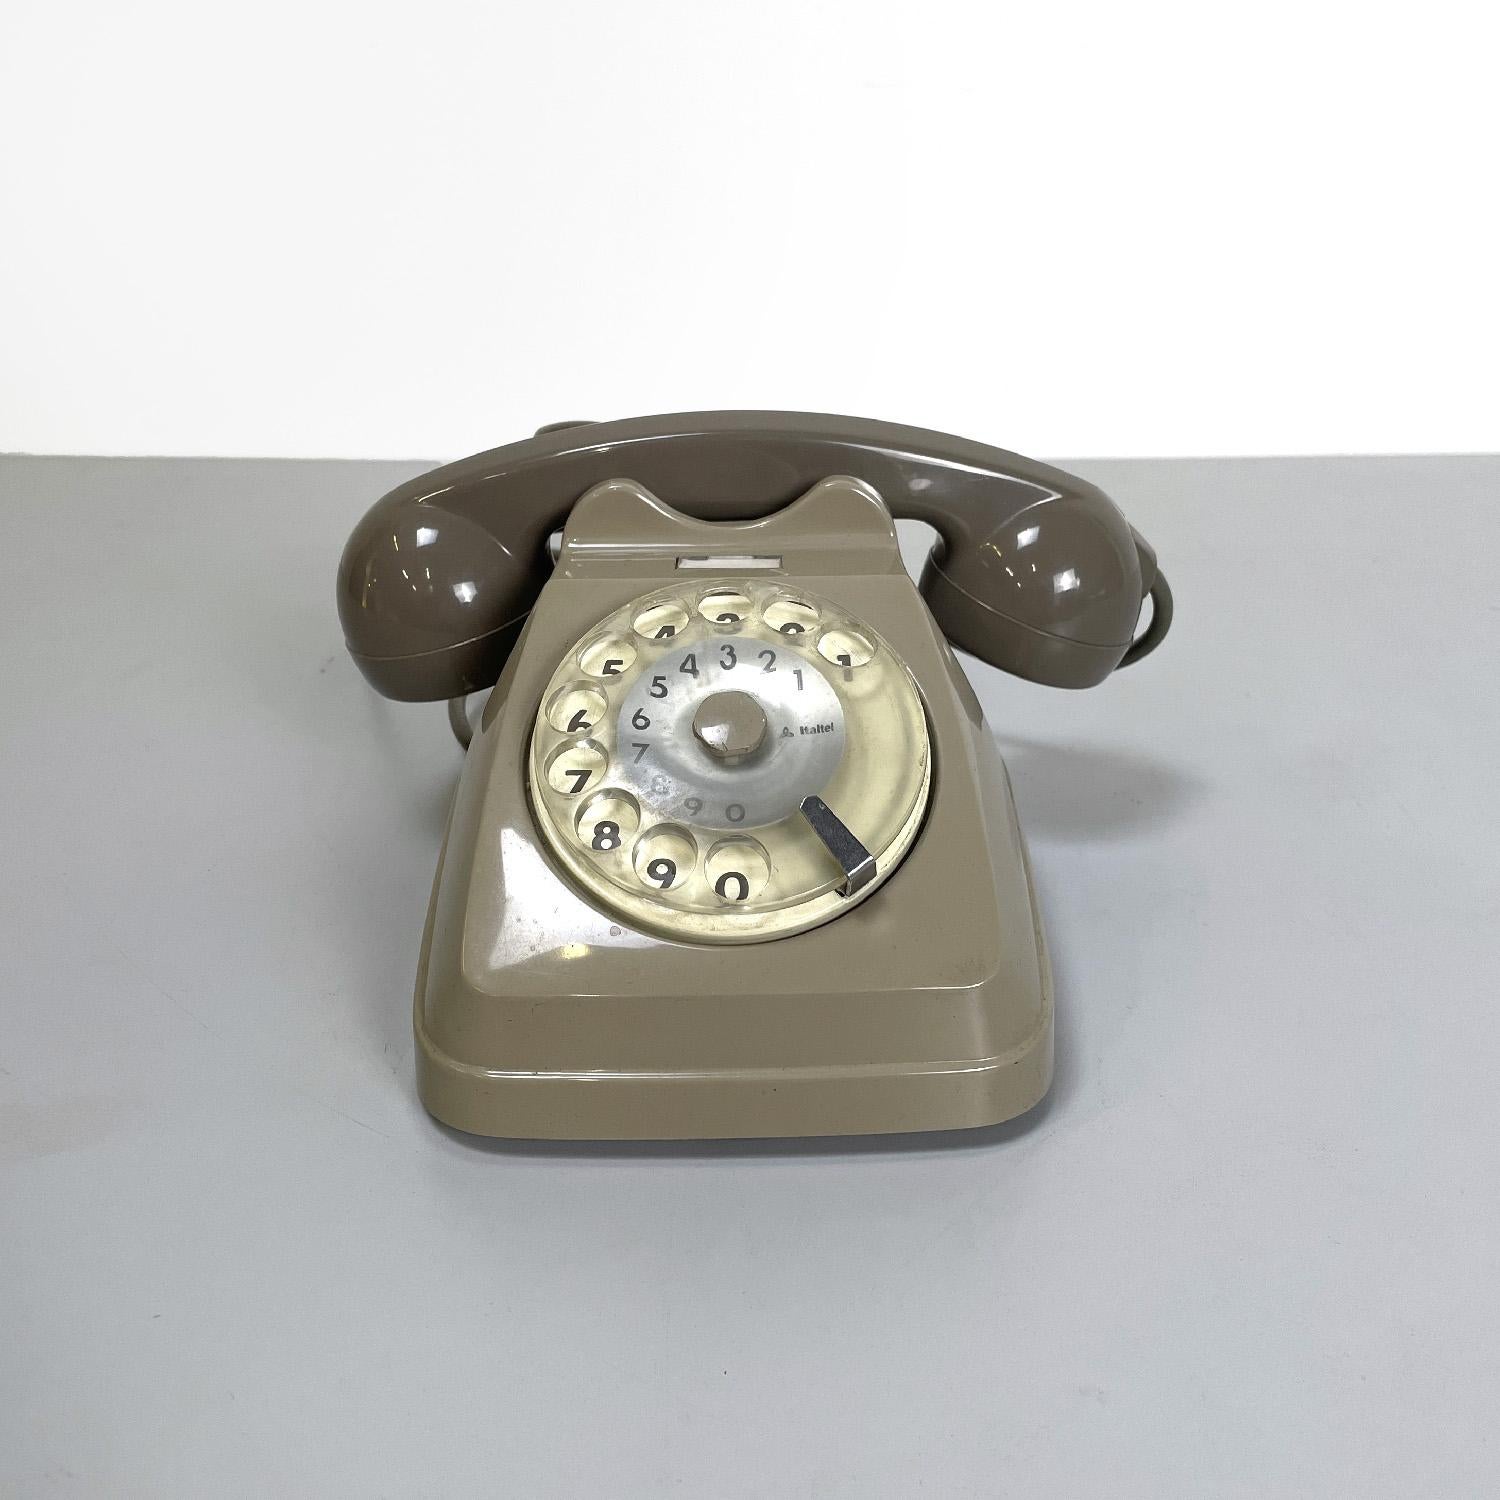 telephones in the 1960s